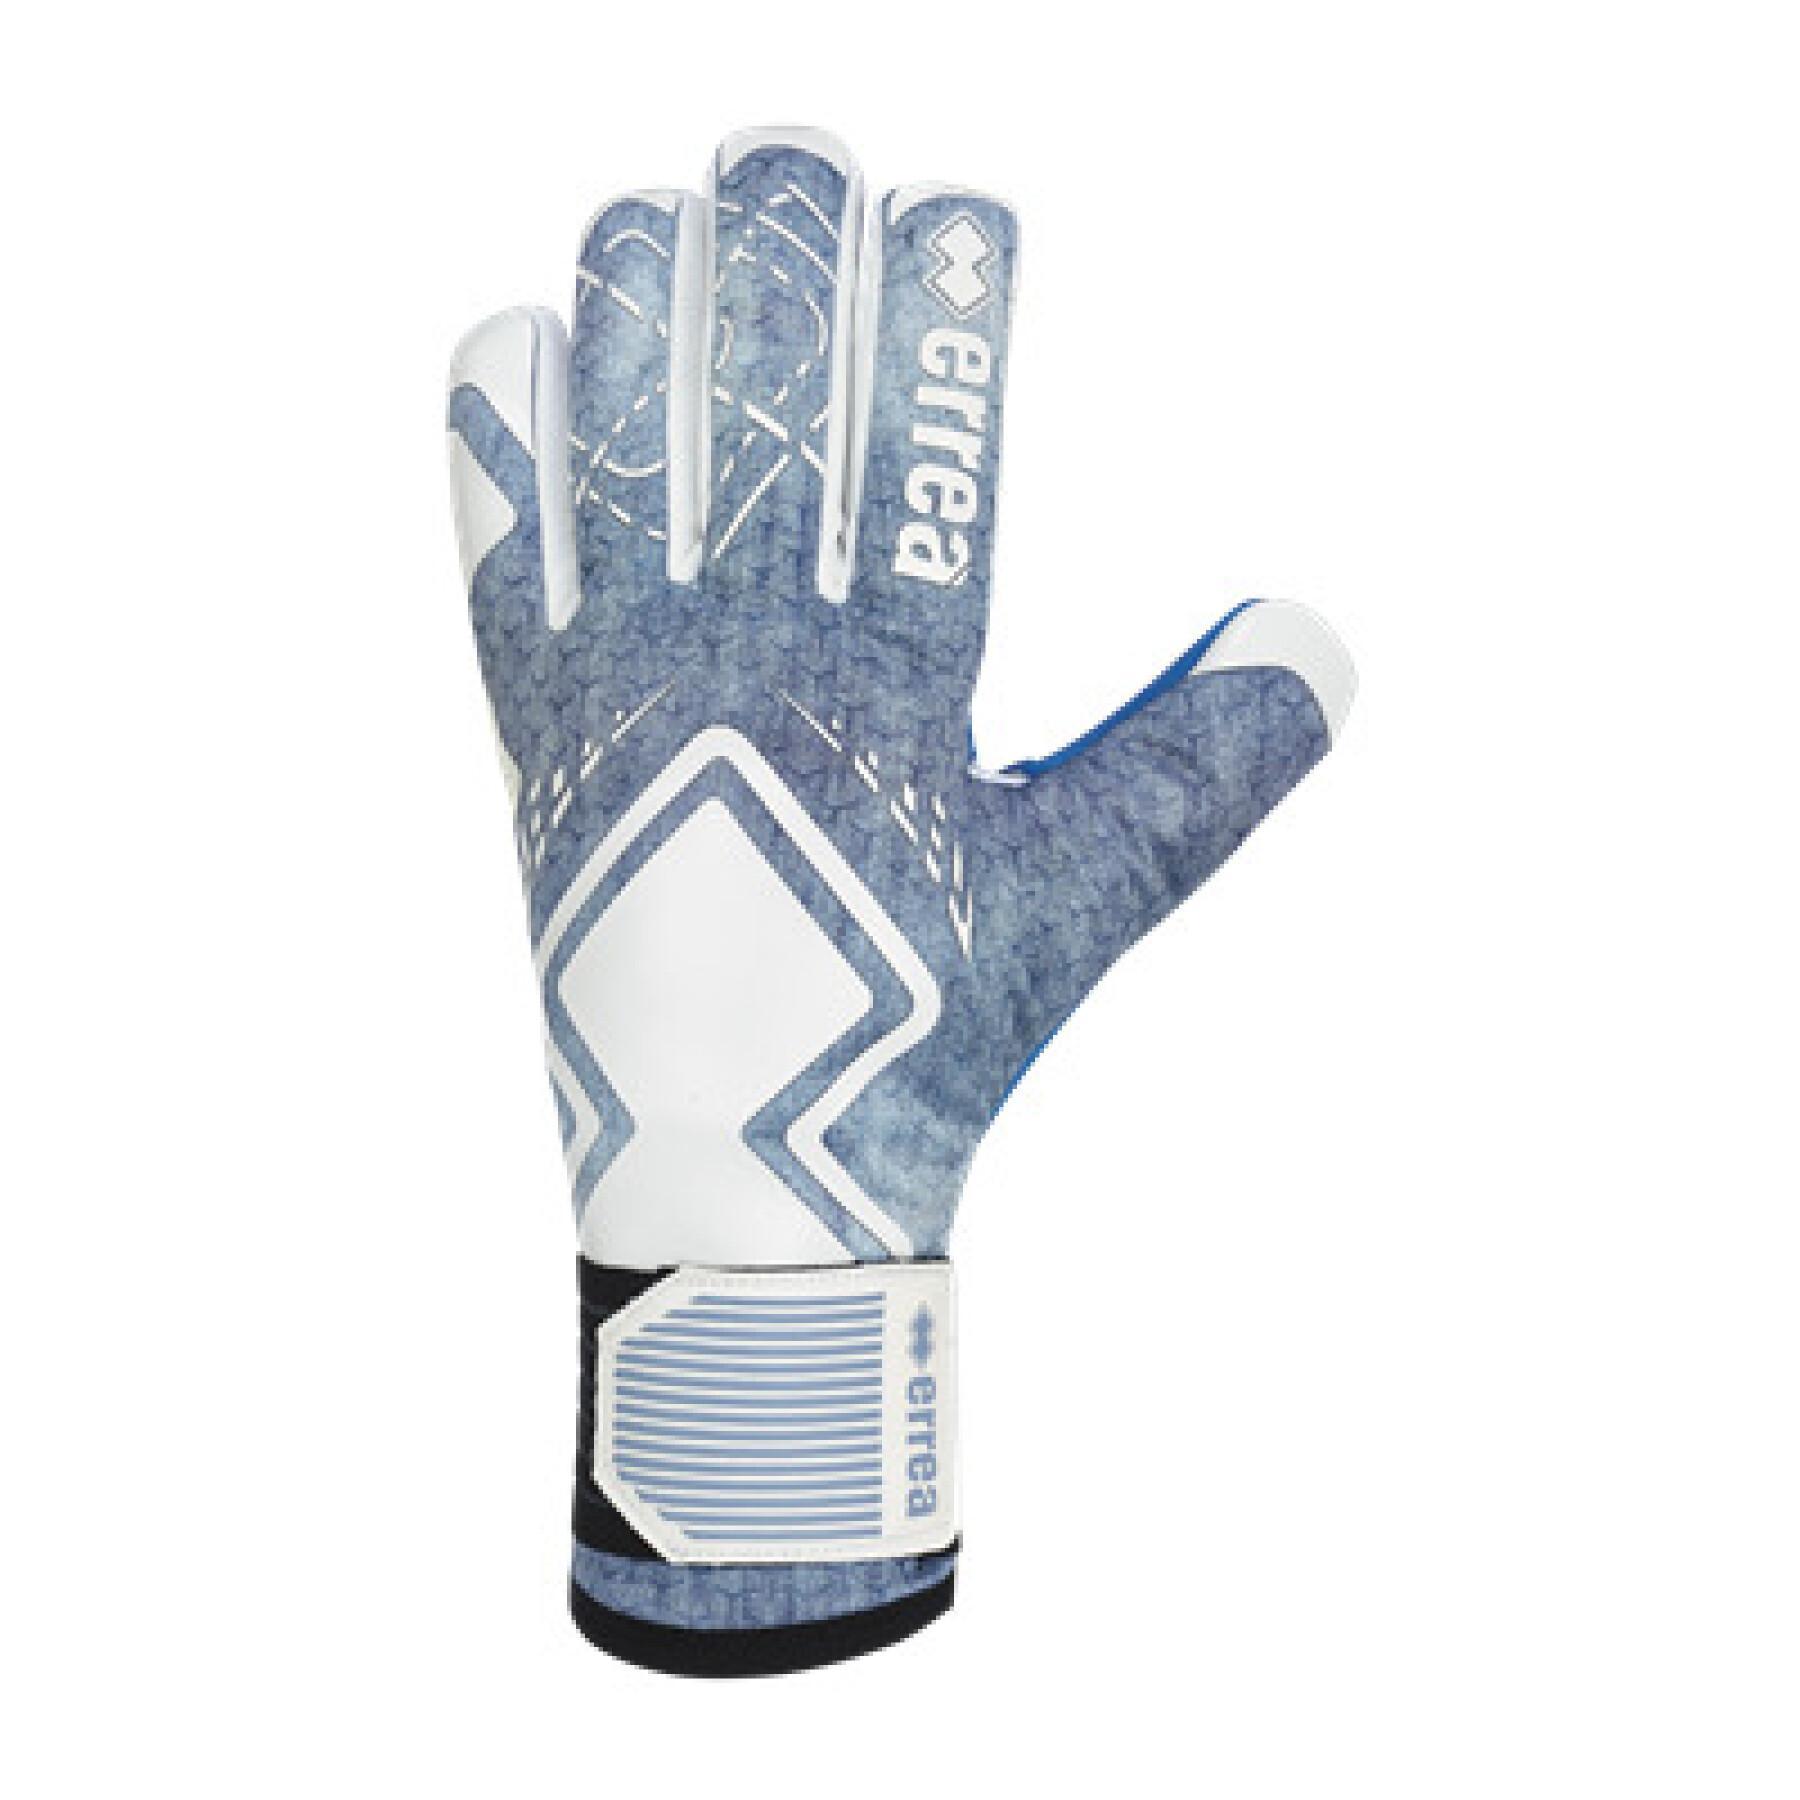 Goalkeeper gloves Errea Vzero The Icon Jeans Edition